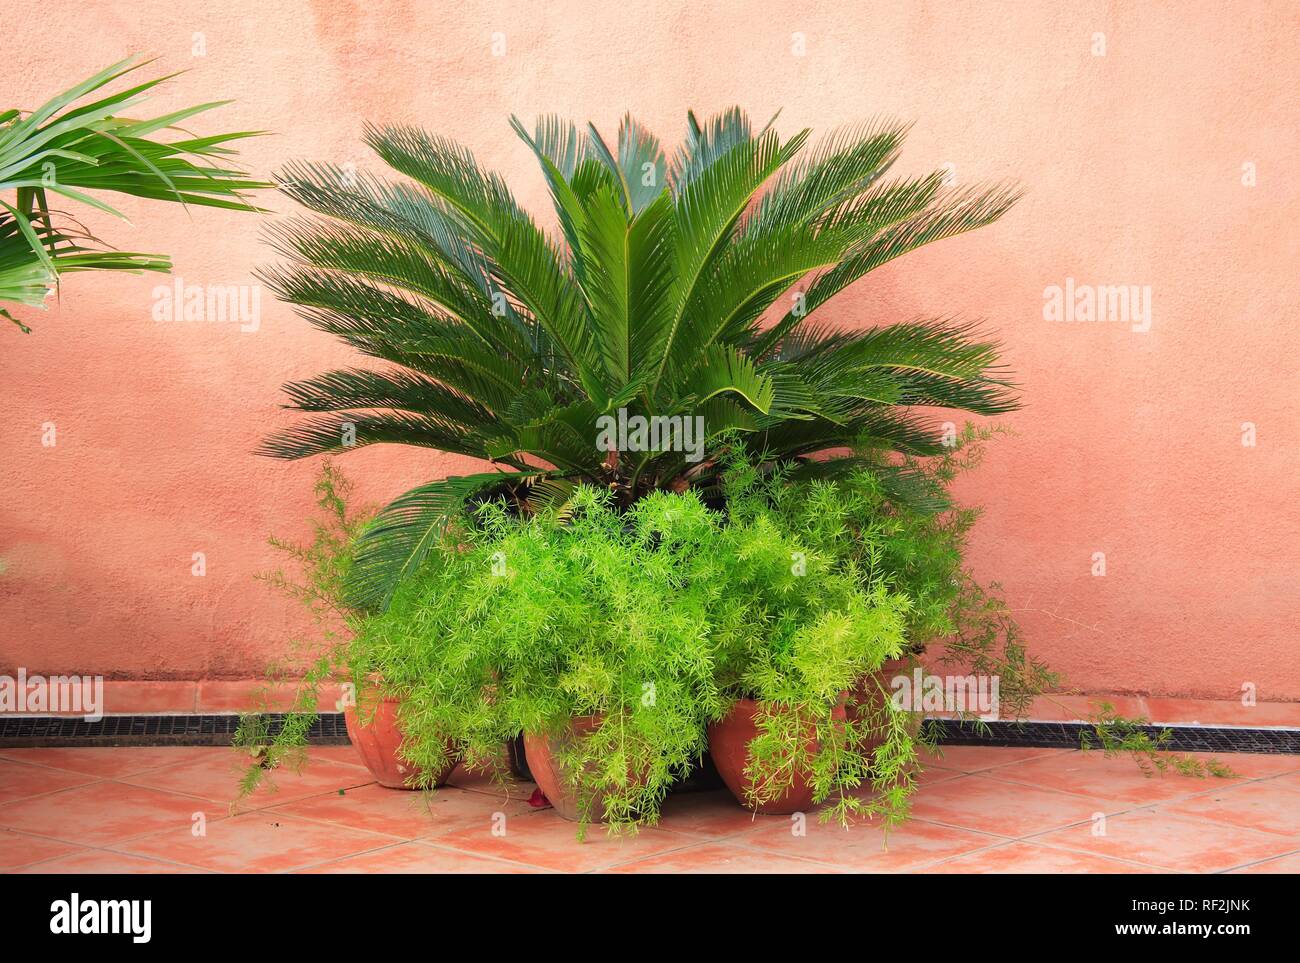 Topfpflanzen vor einem rosa Wand, idyllische Leben in Havanna, Kuba, Karibik Stockfoto